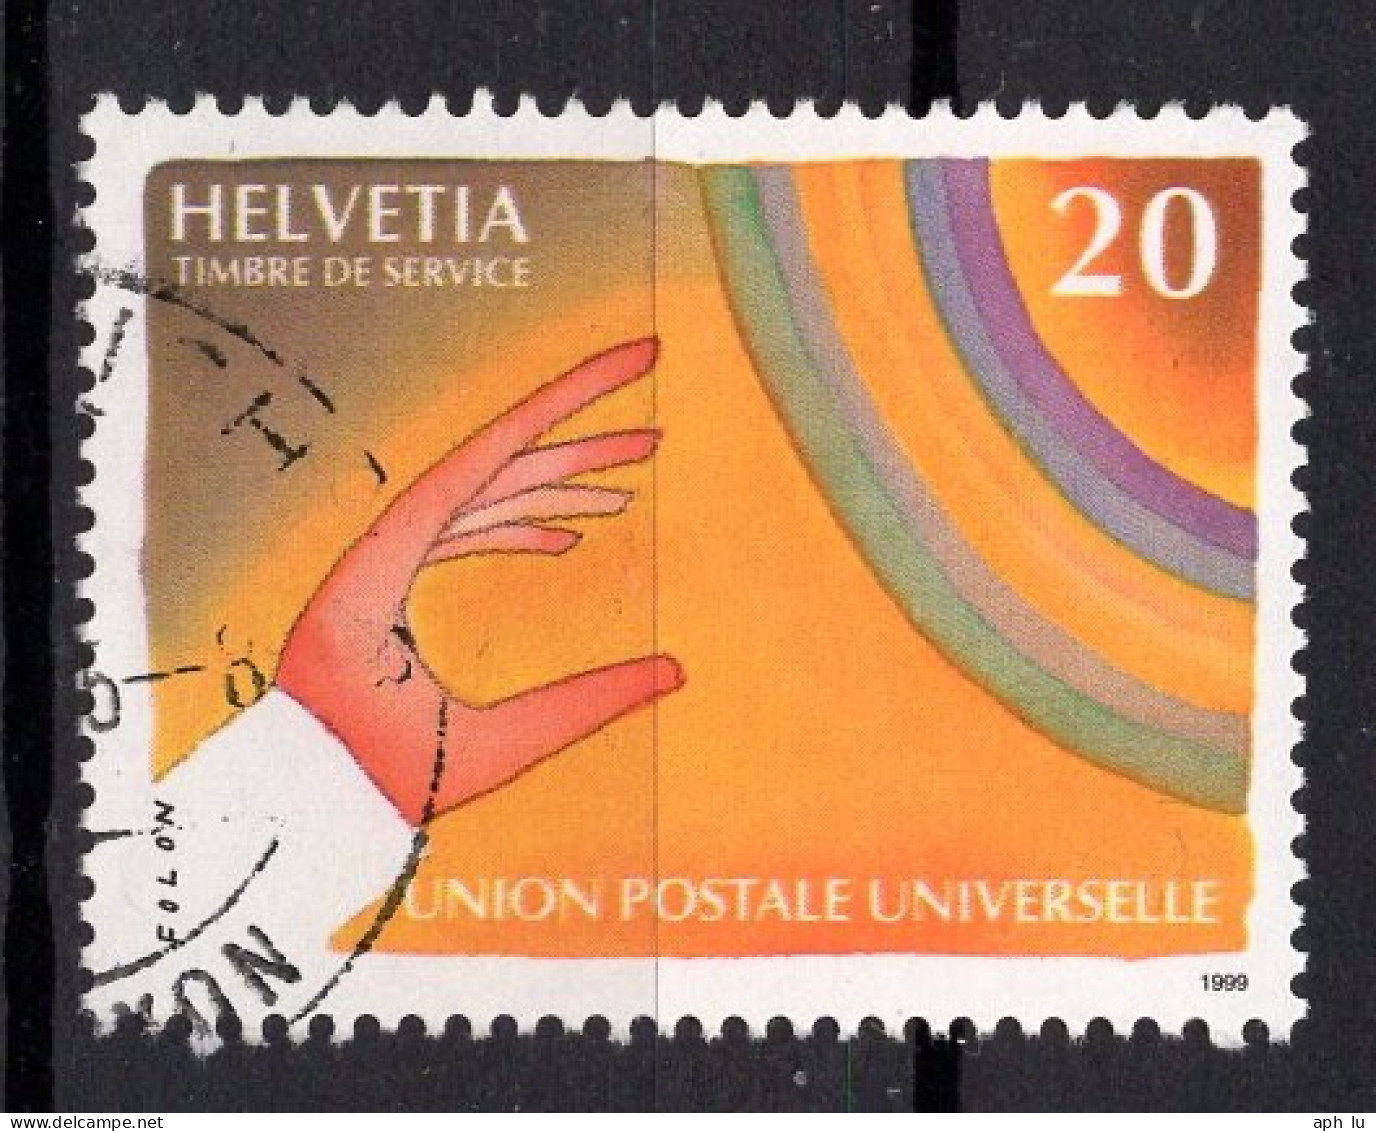 Union Postale Universelle (UPU) (h600903) - Service